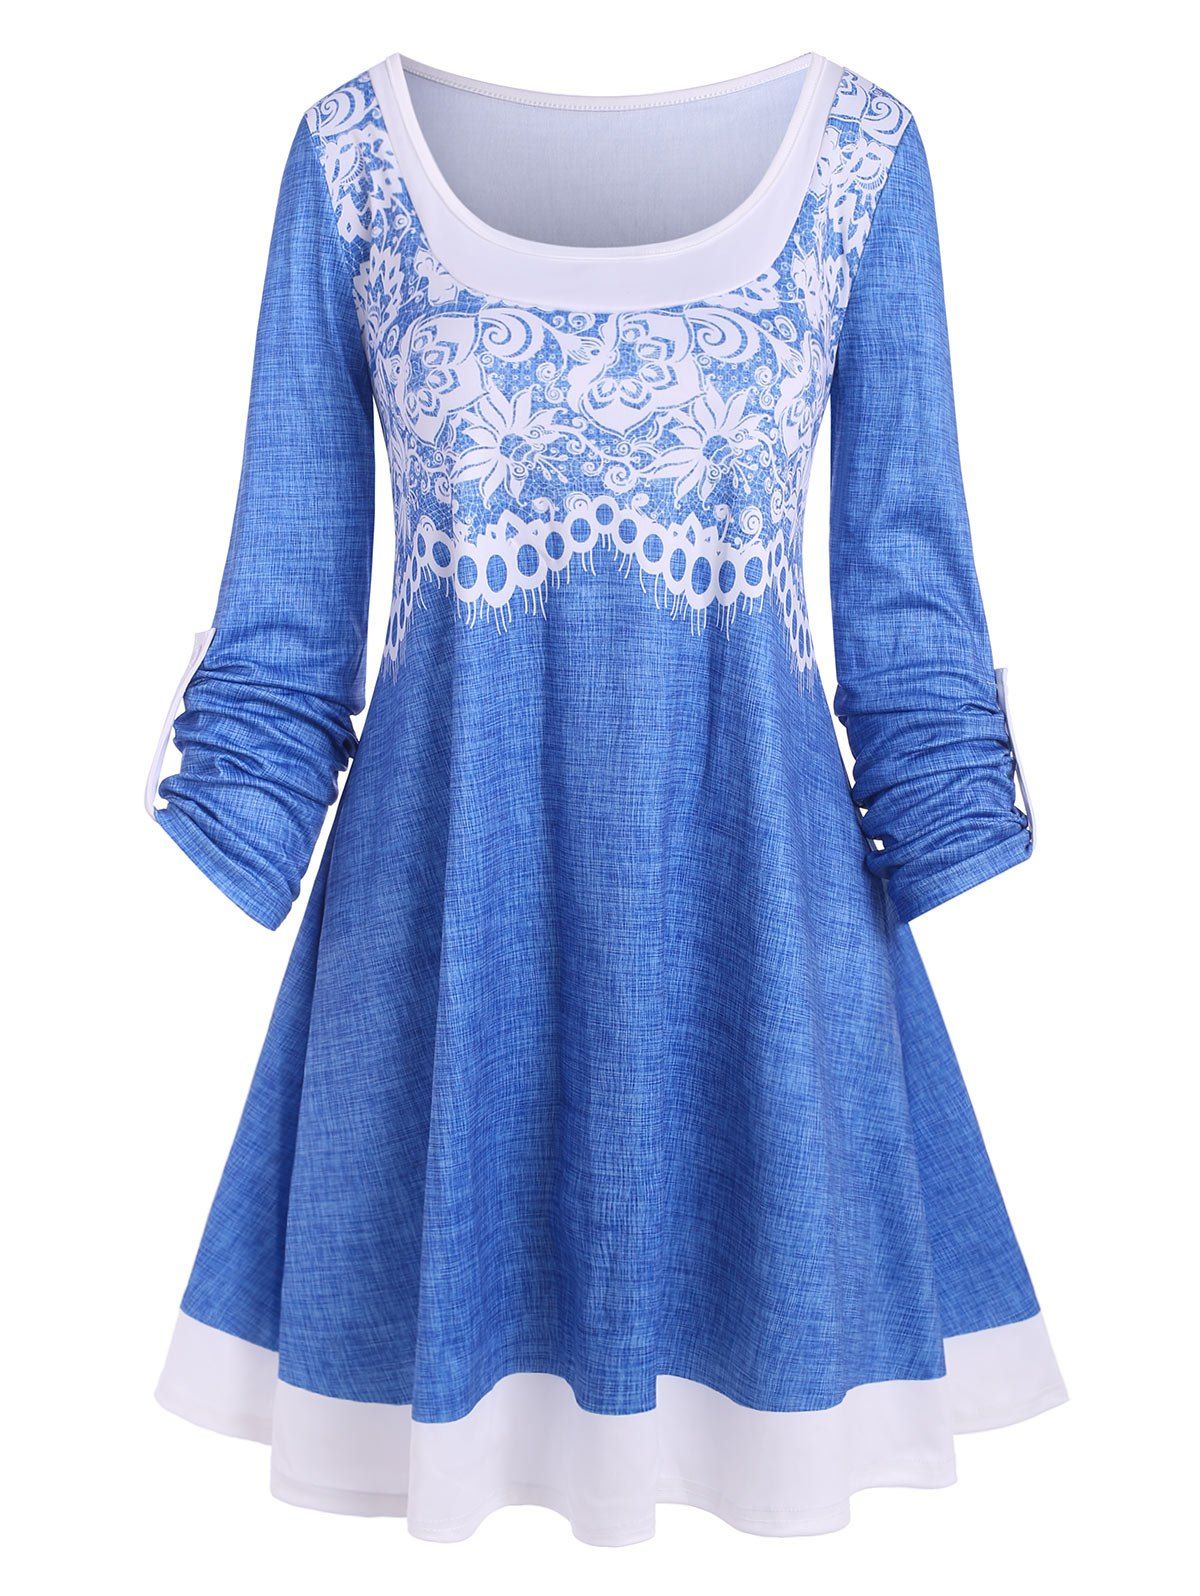 3D Denim Floral Print Roll Up Sleeve Tunic Dress - BLUE L